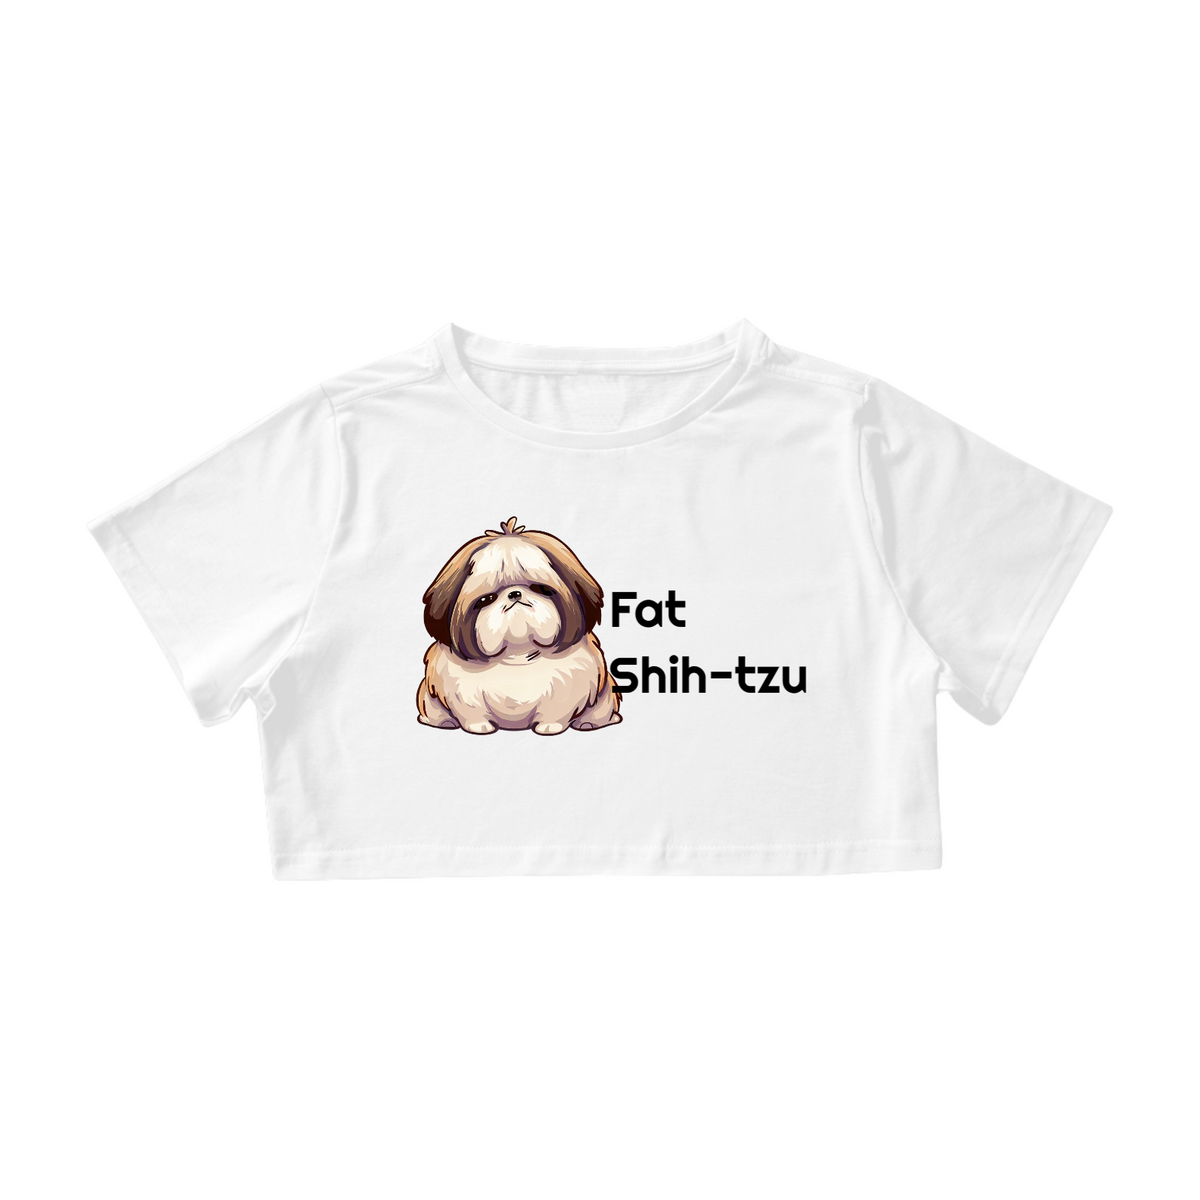 Nome do produto: Camiseta Cropped - Fat Shih-tzu - Branca - Modelo 1